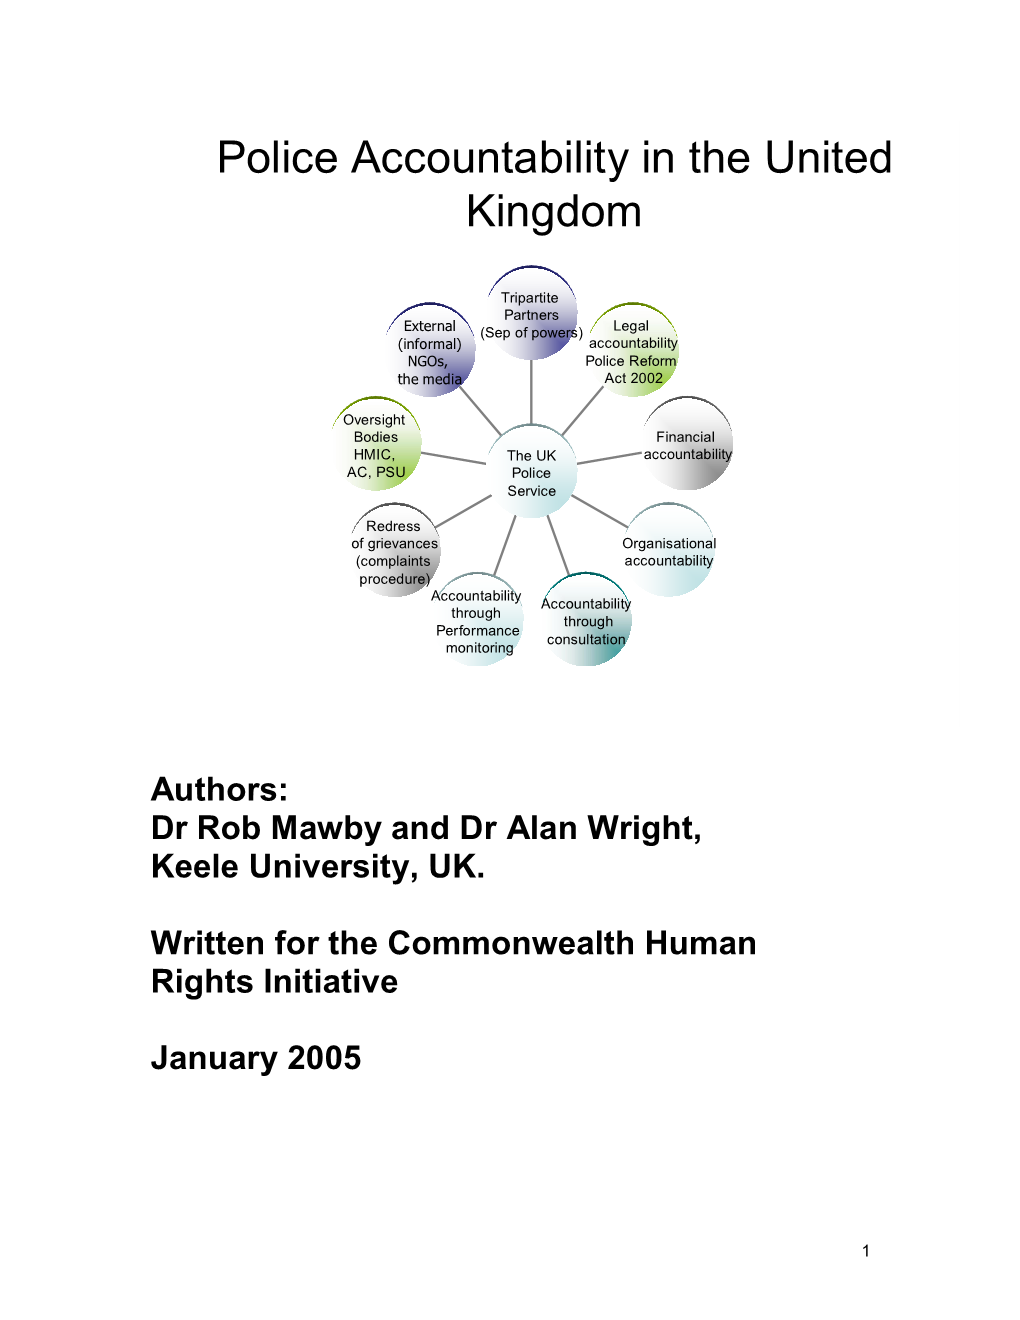 Police Accountability in the United Kingdom